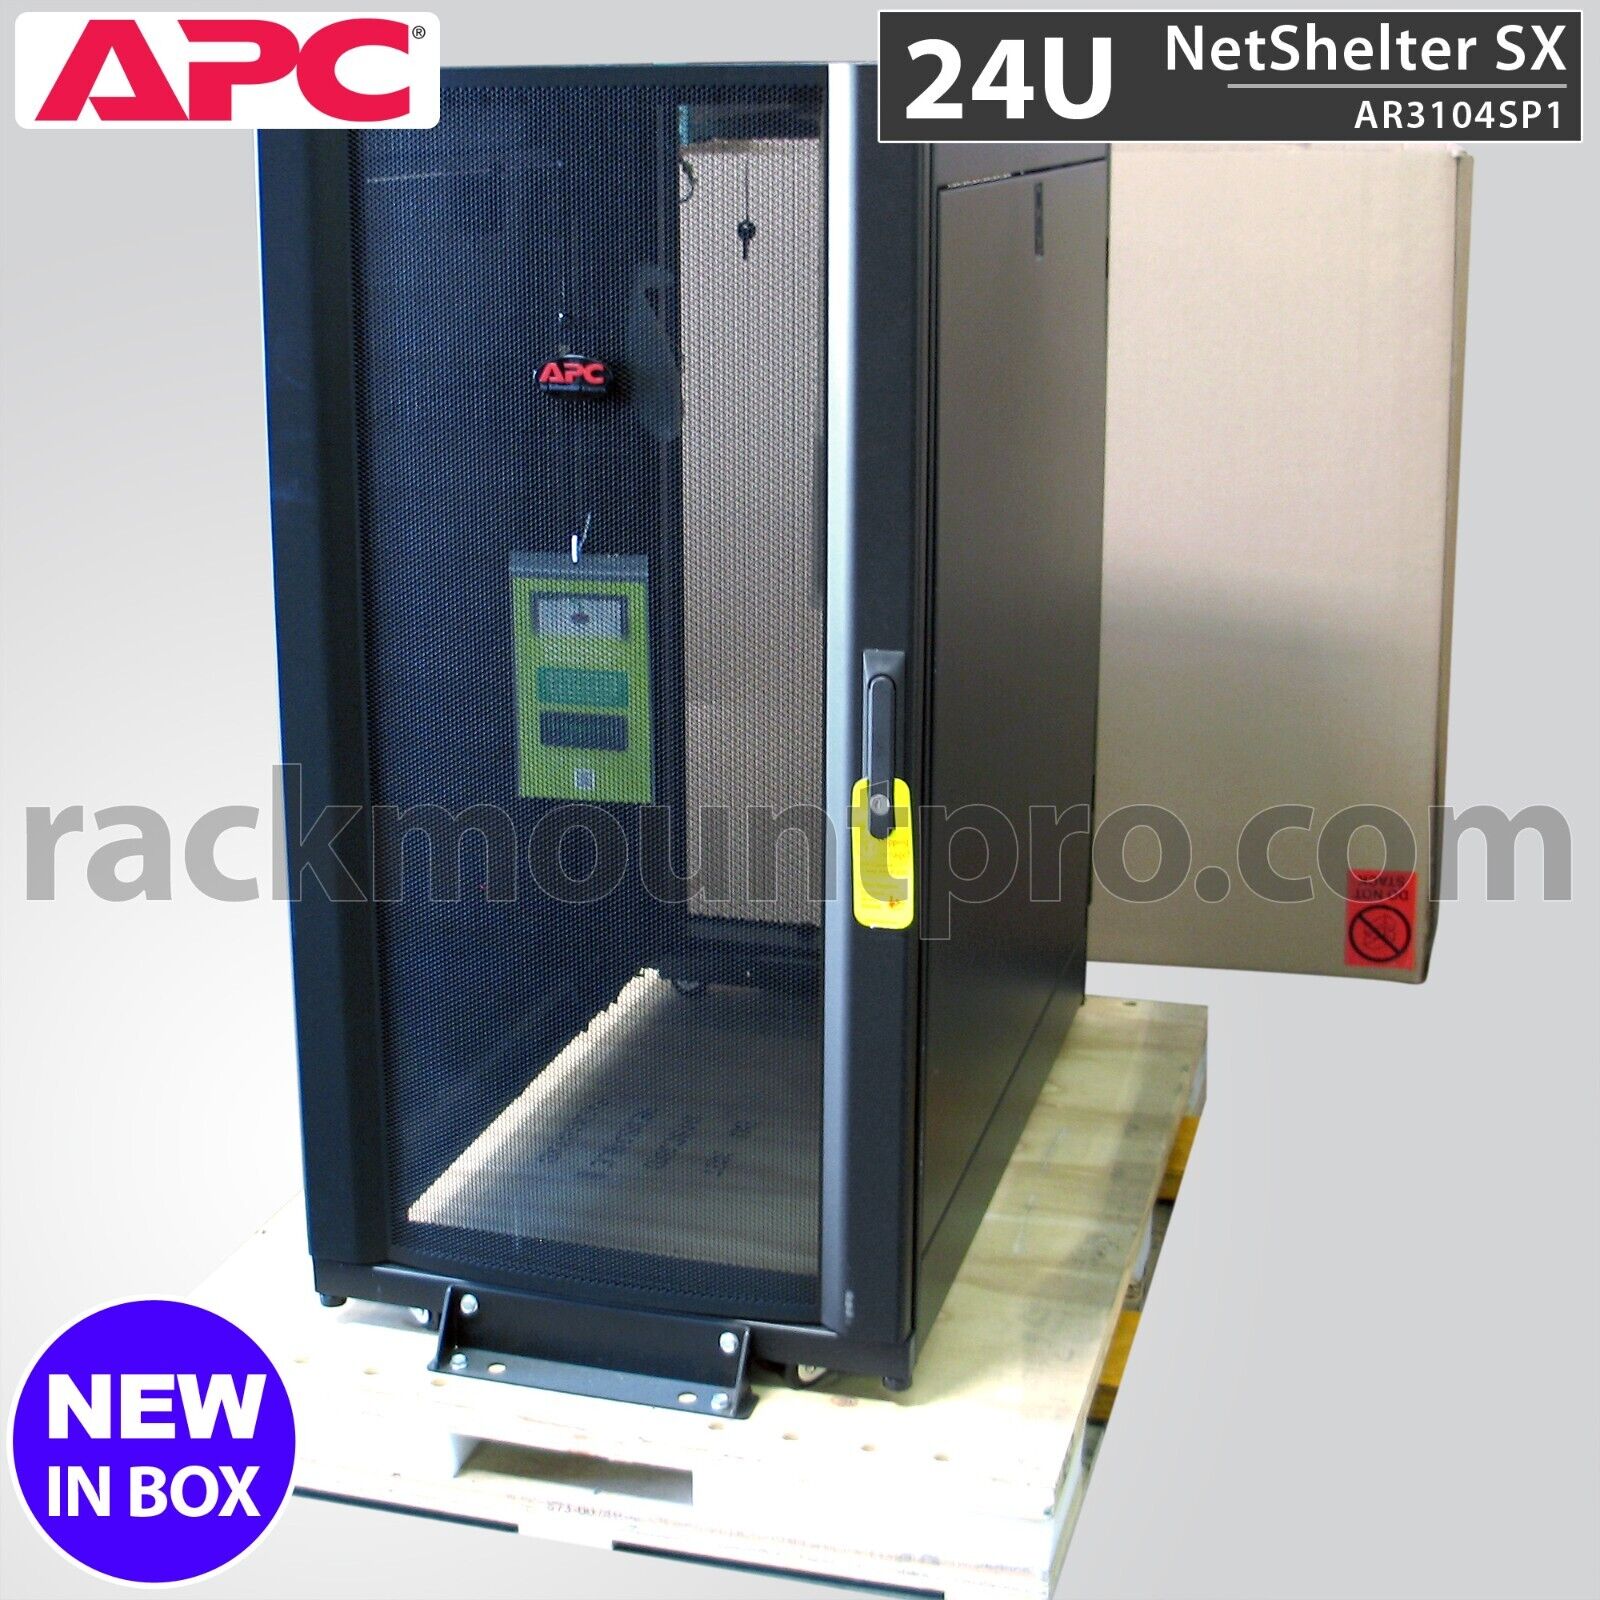 APC AR3104SP1 NetShelter SX 24U Server Rack Enclosure New in Box